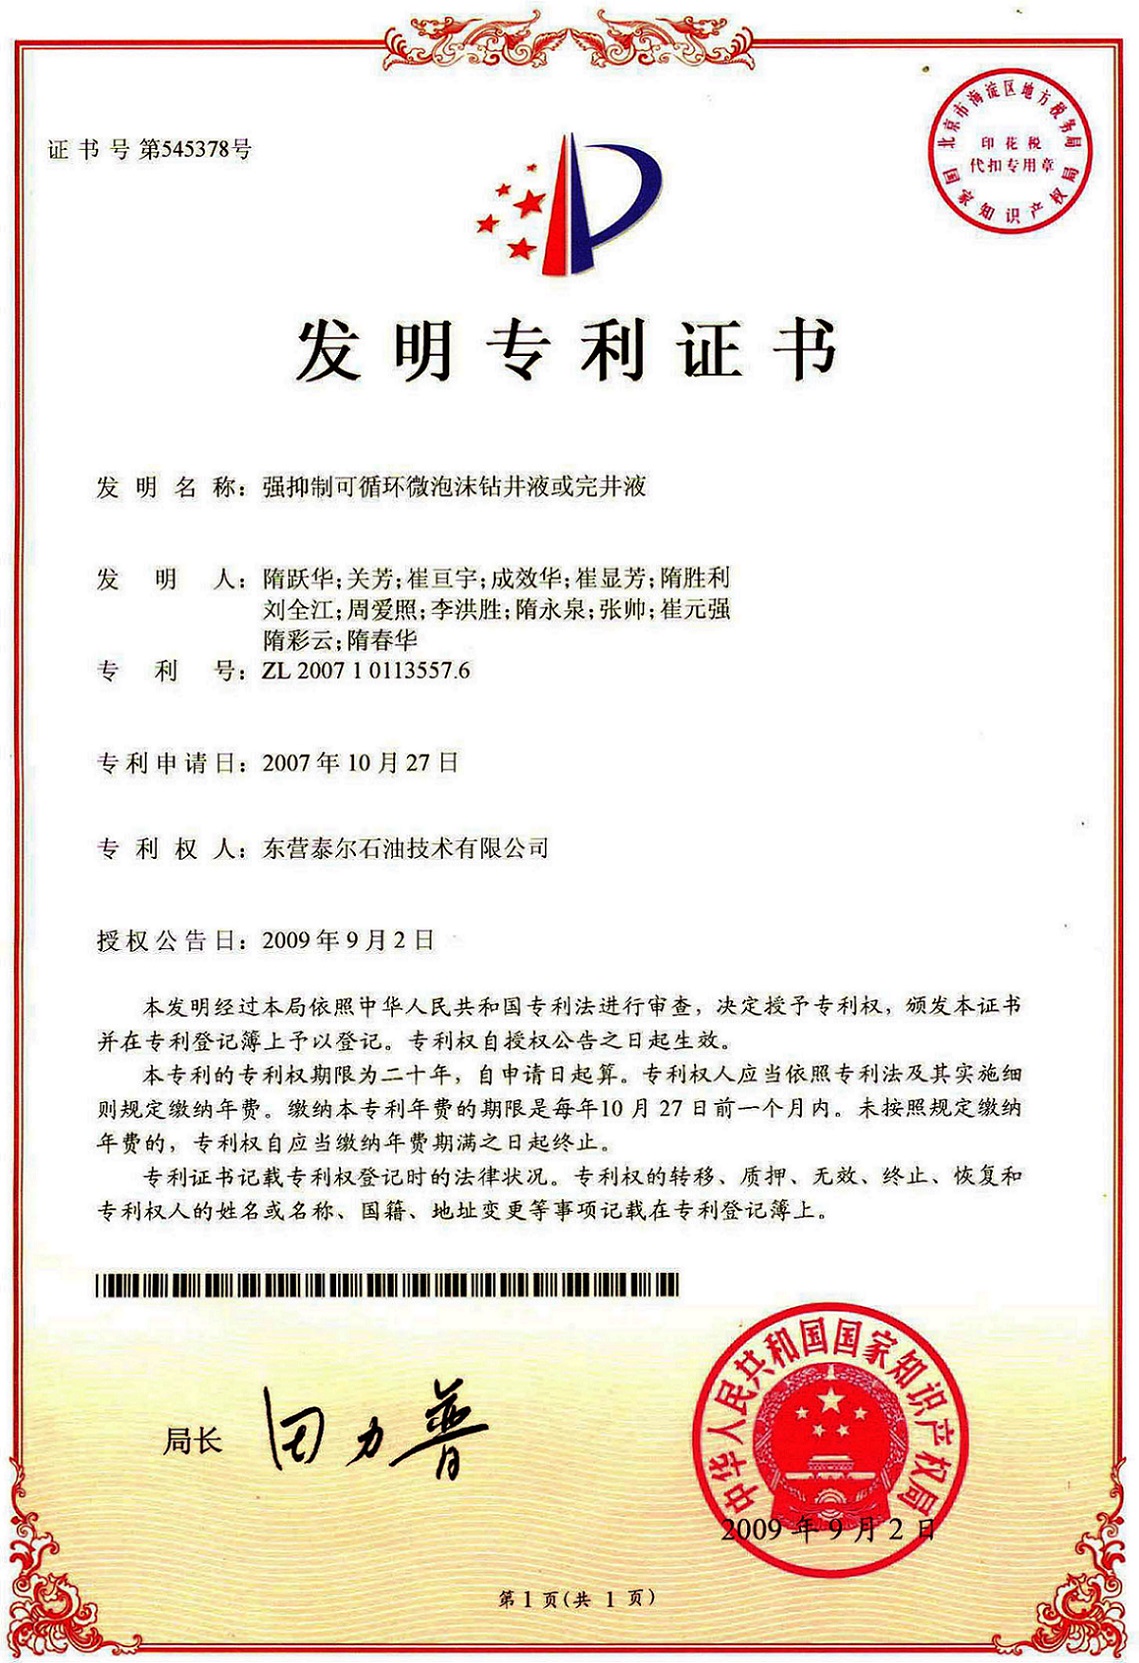 Dongying Taier Petroleum Technology Co., Ltd.